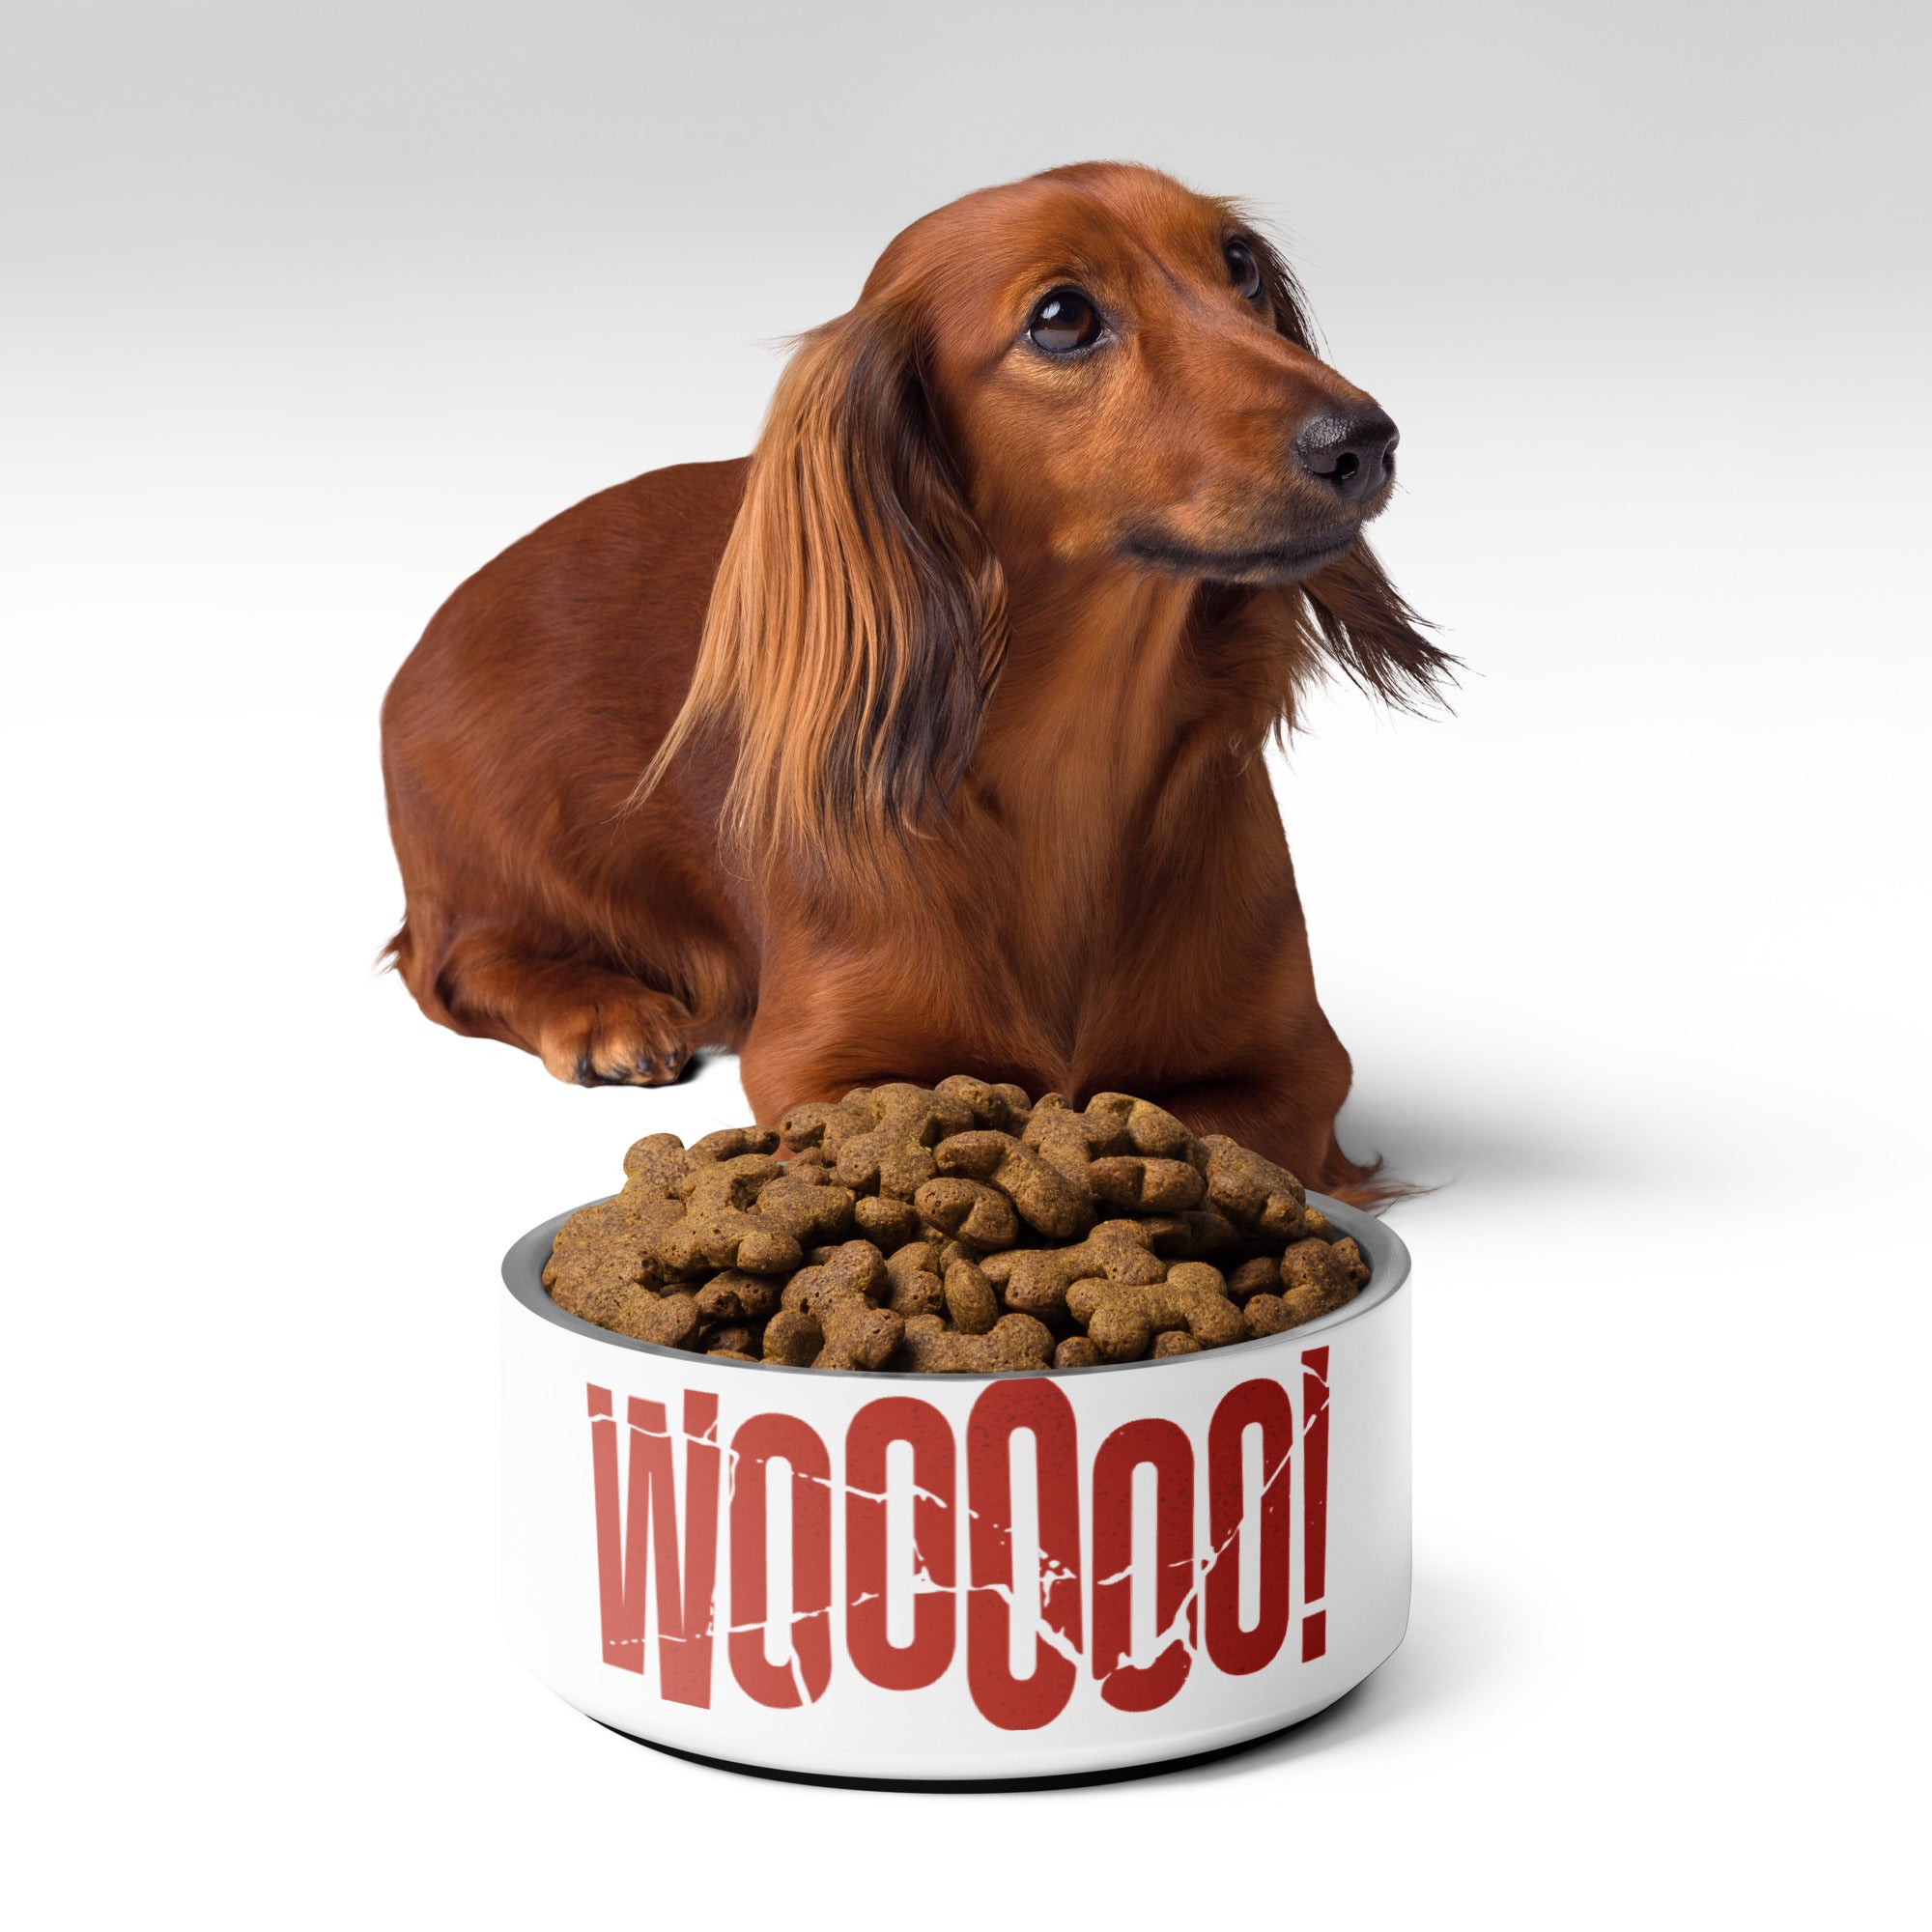 WOOOOO Pet bowl